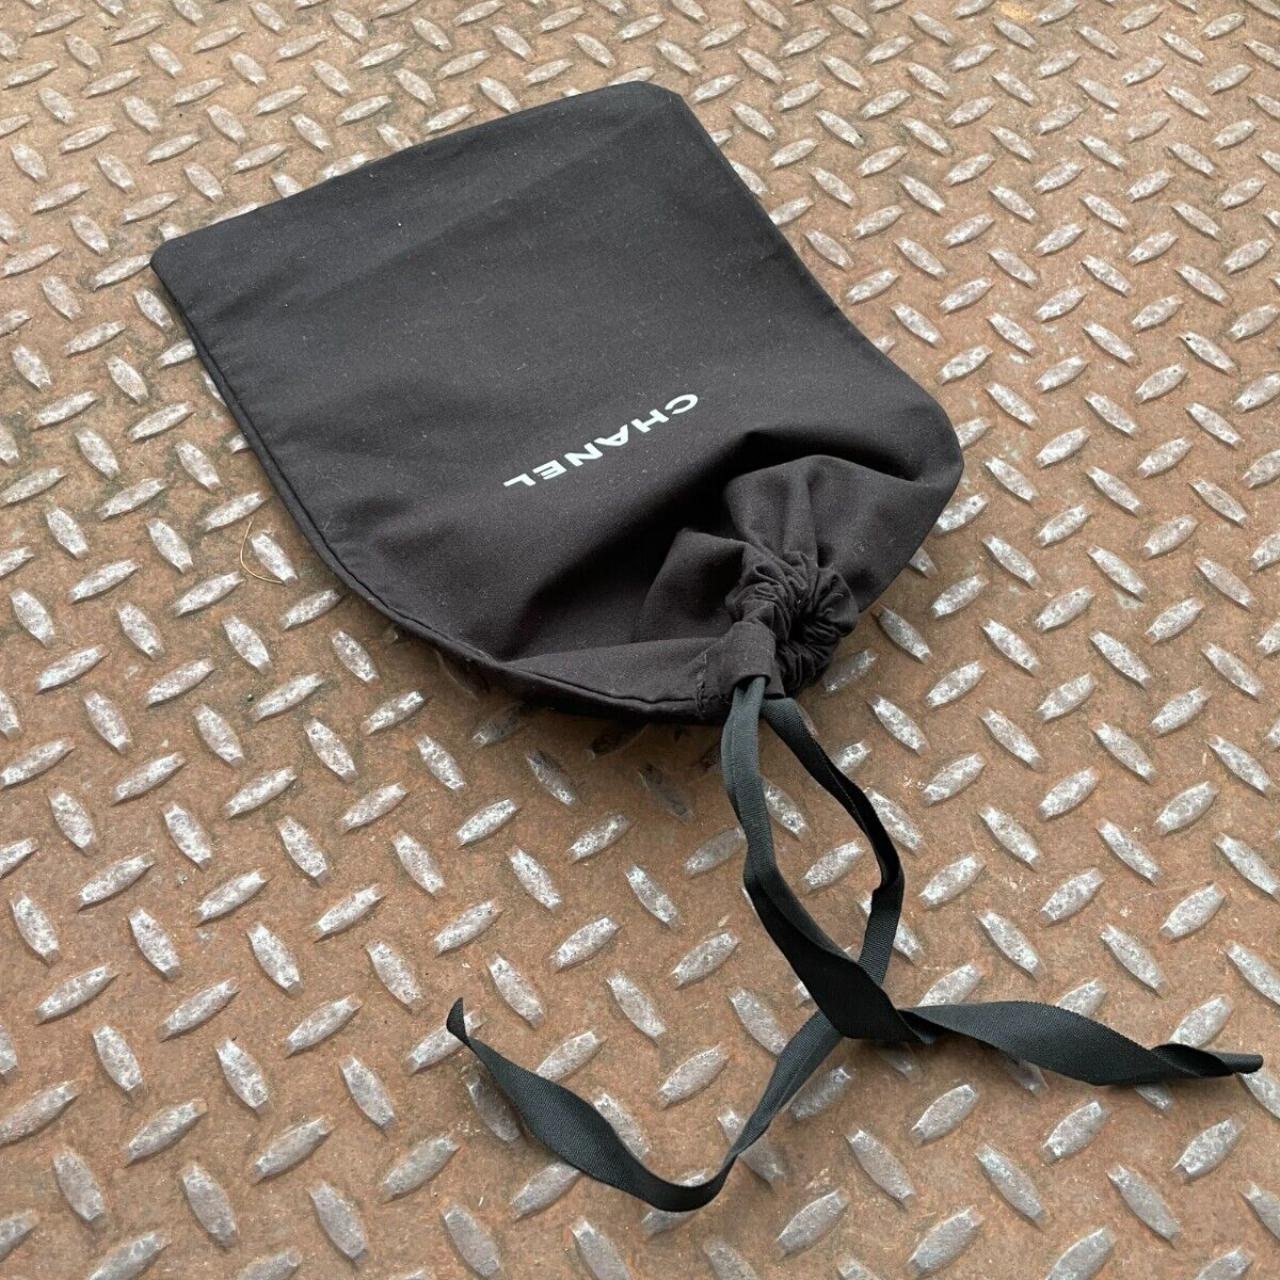 chanel black nylon bag new